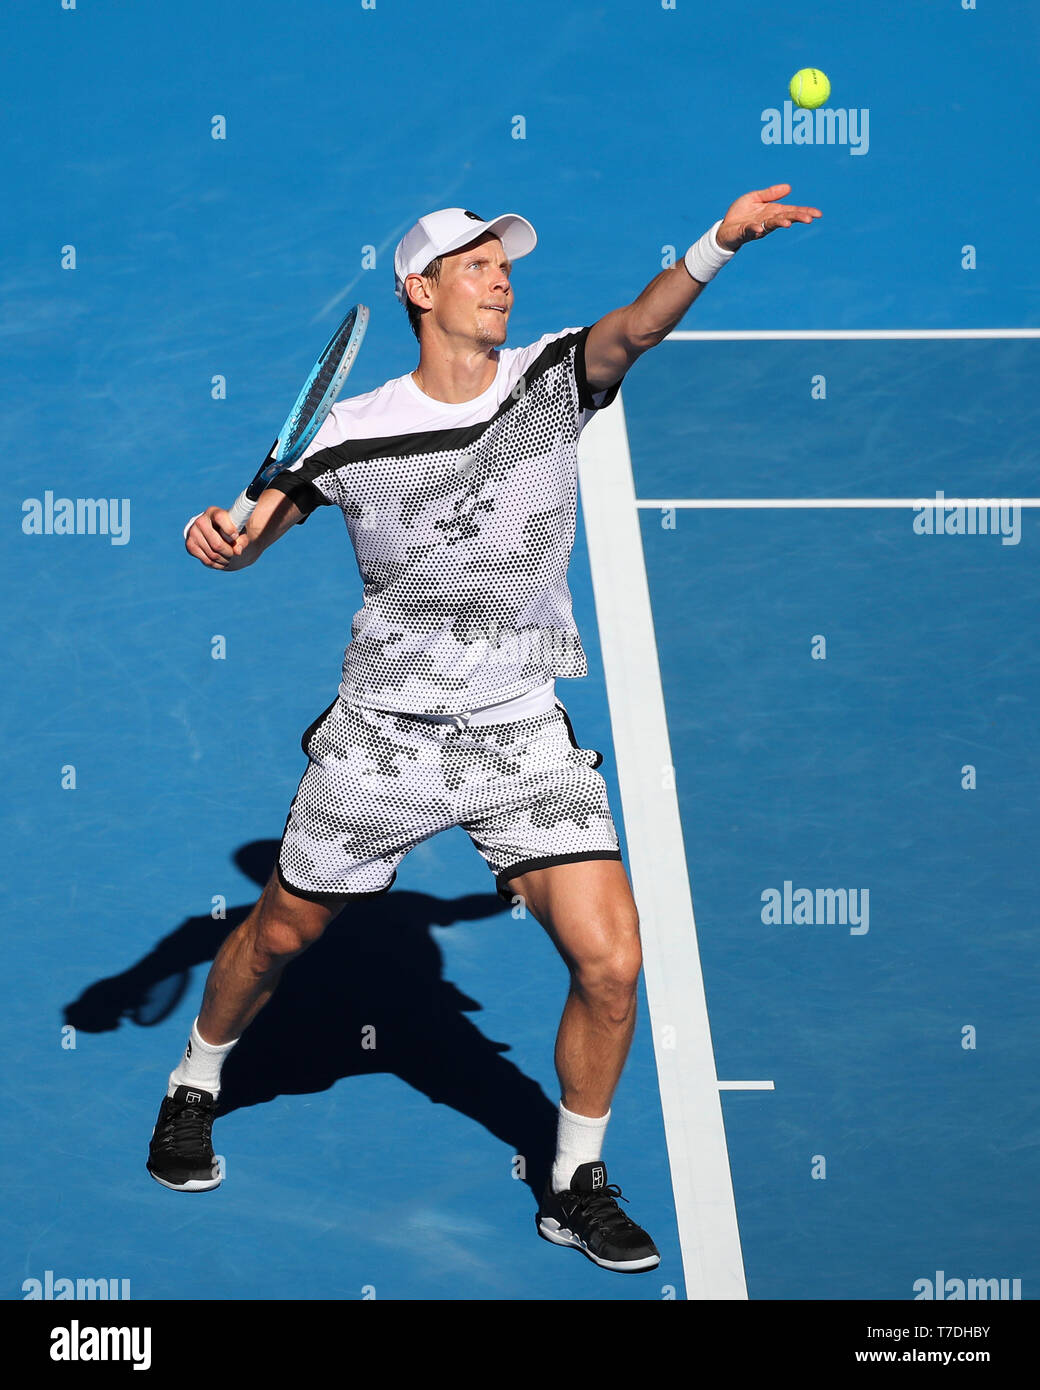 Czech tennis player Tomas Berdych playing service shot in Australian Open  2019 tennis tournament, Melbourne Park, Melbourne, Victoria, Australia  Stock Photo - Alamy